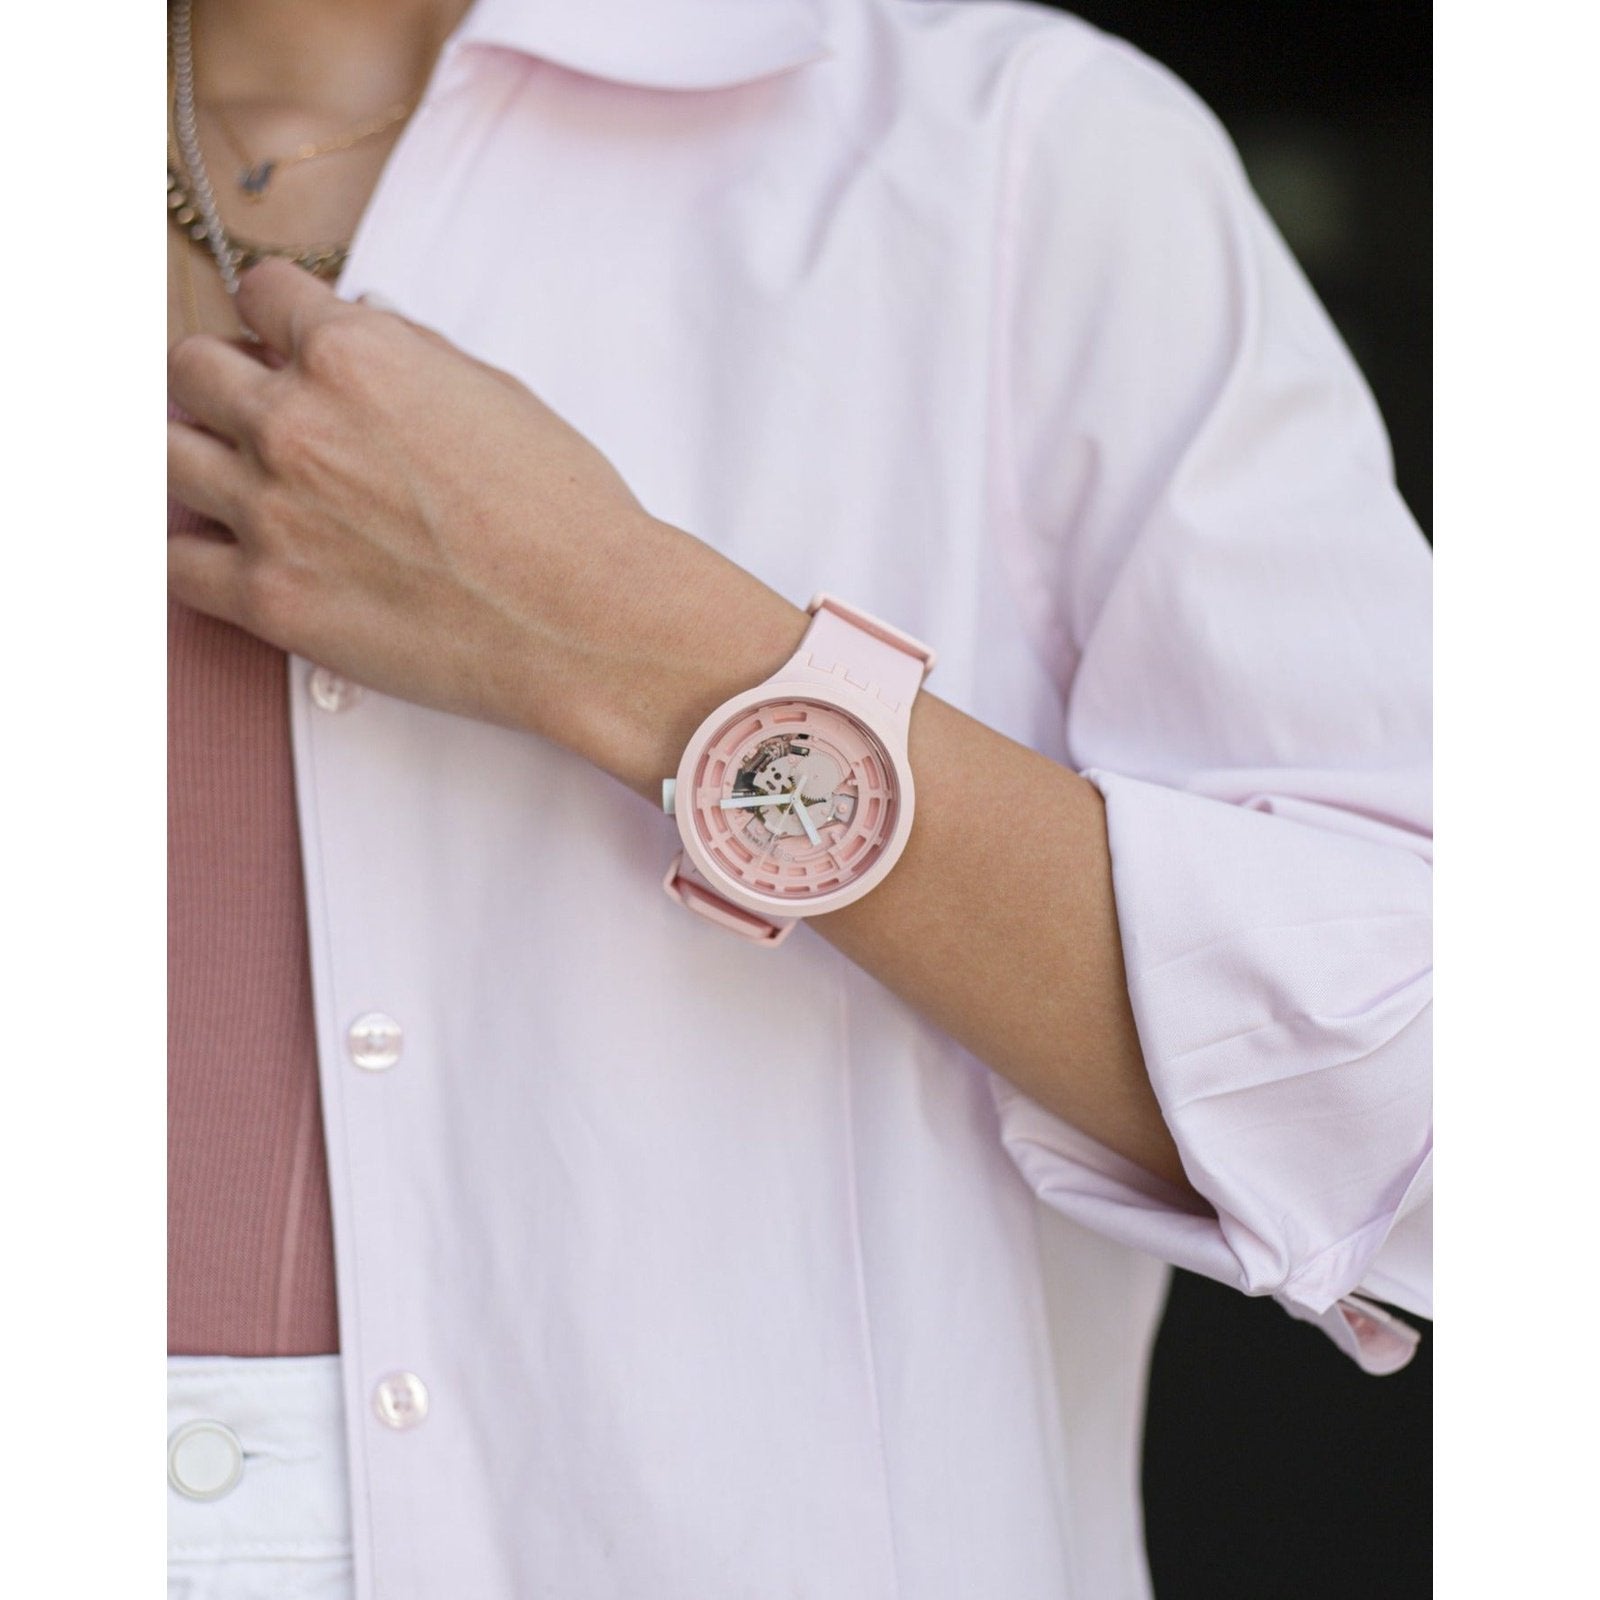 C-Pink Swatch